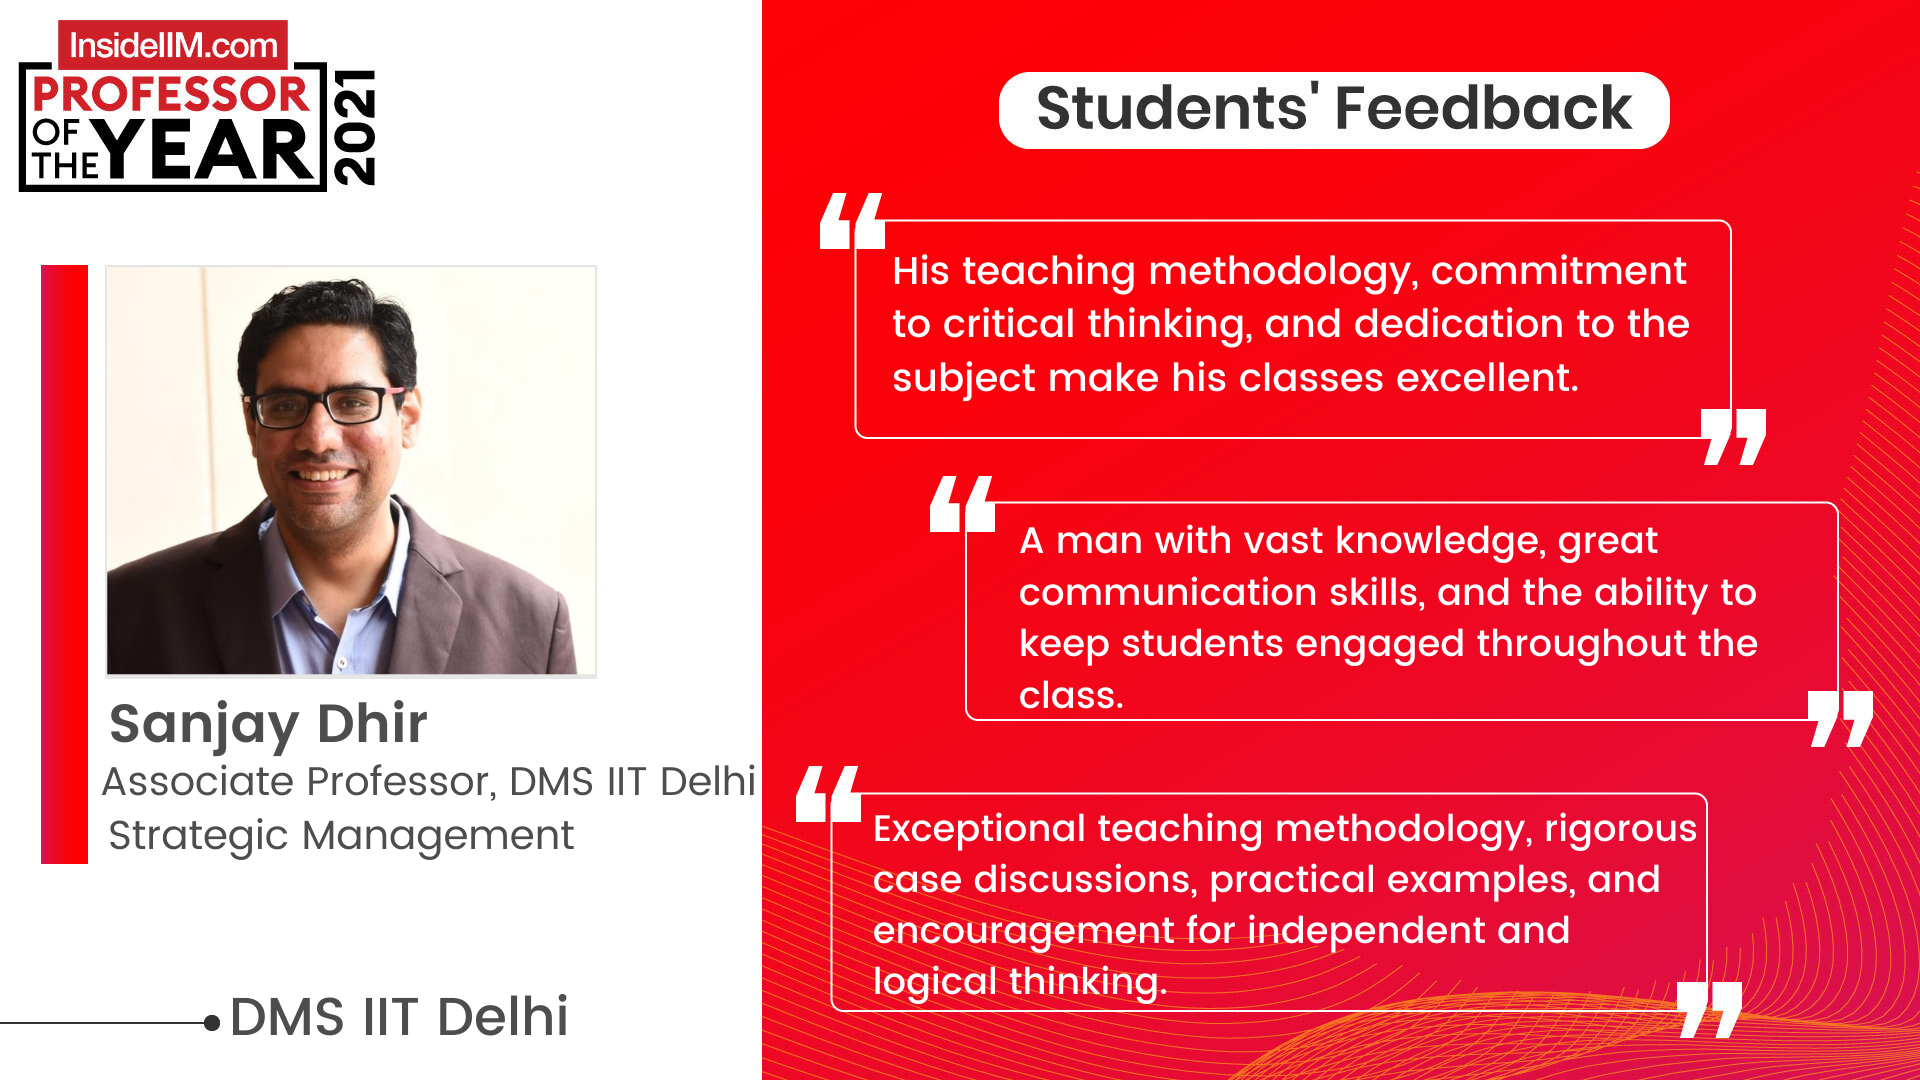 Saurabh - New Delhi,Delhi : Hello,i am doing my masters from IIT DELHI and  having passion in teaching